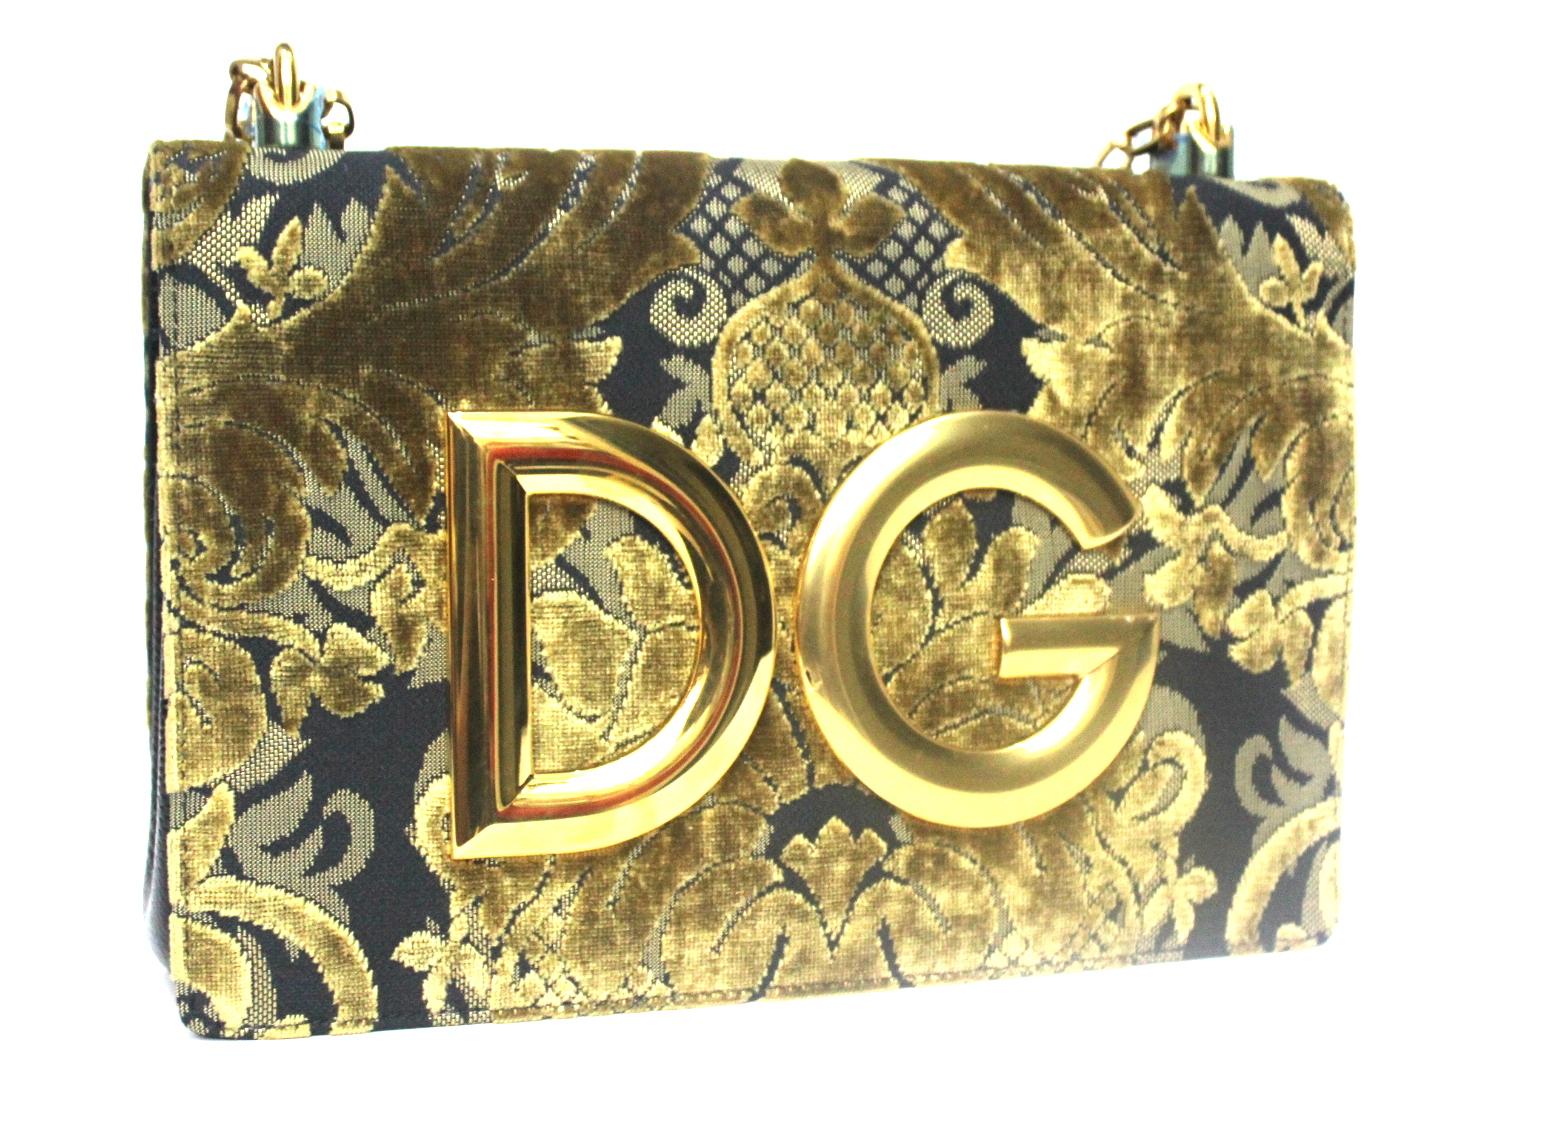 Dolce & Gabbana Gold/Black Damask Girls Bag 1